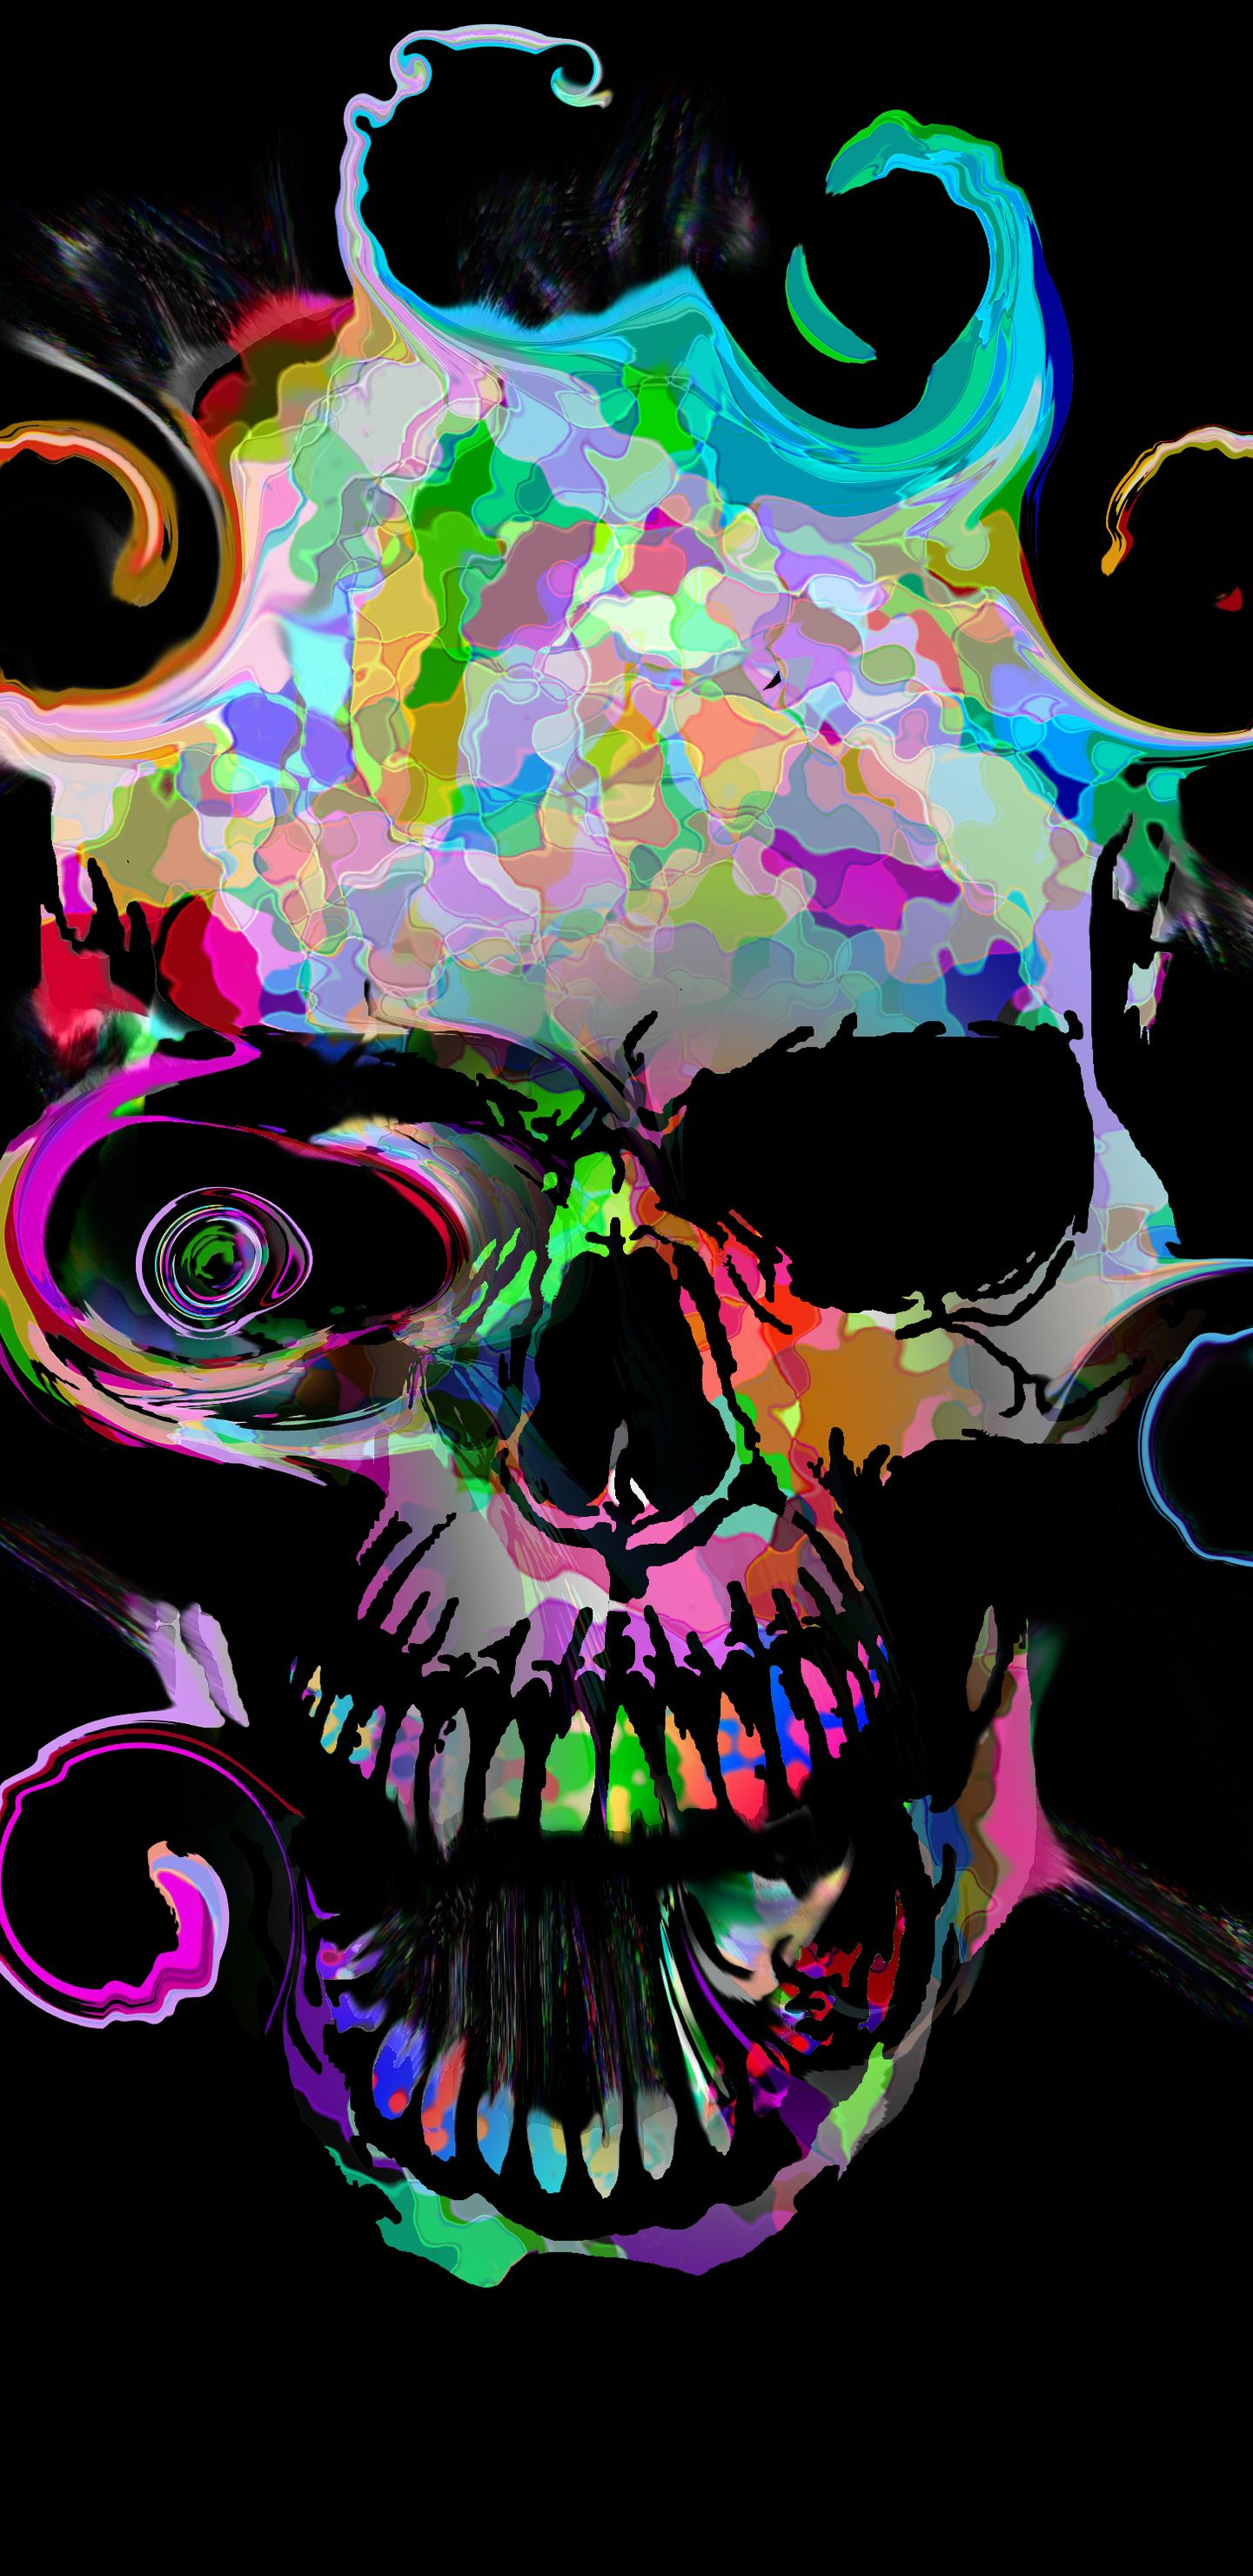 1440x2960 Skull Samsung Galaxy Wallpapers Top Free Skull Samsung Galaxy Backgrounds